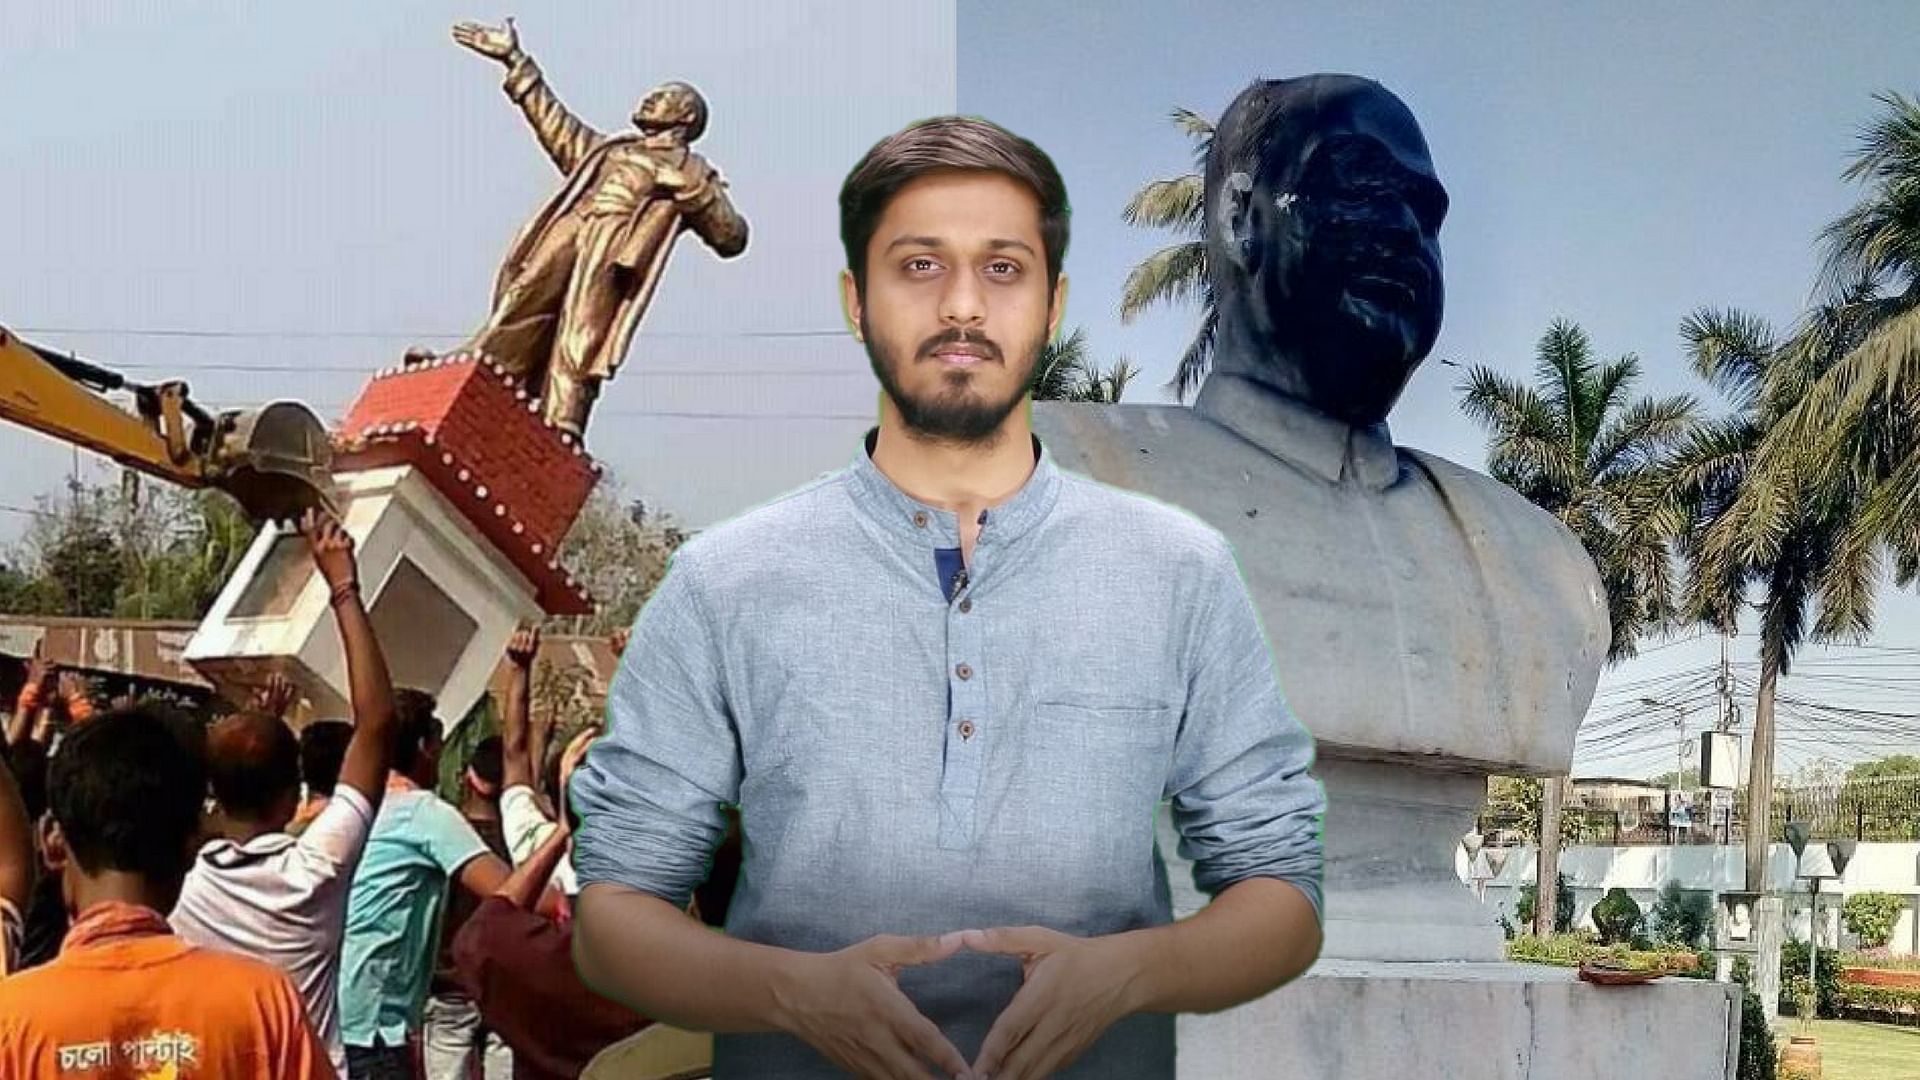 Ambedkar, Gandhi, Periyar, Mookerjee and Lenin: All victims of the statue desecration brigade.